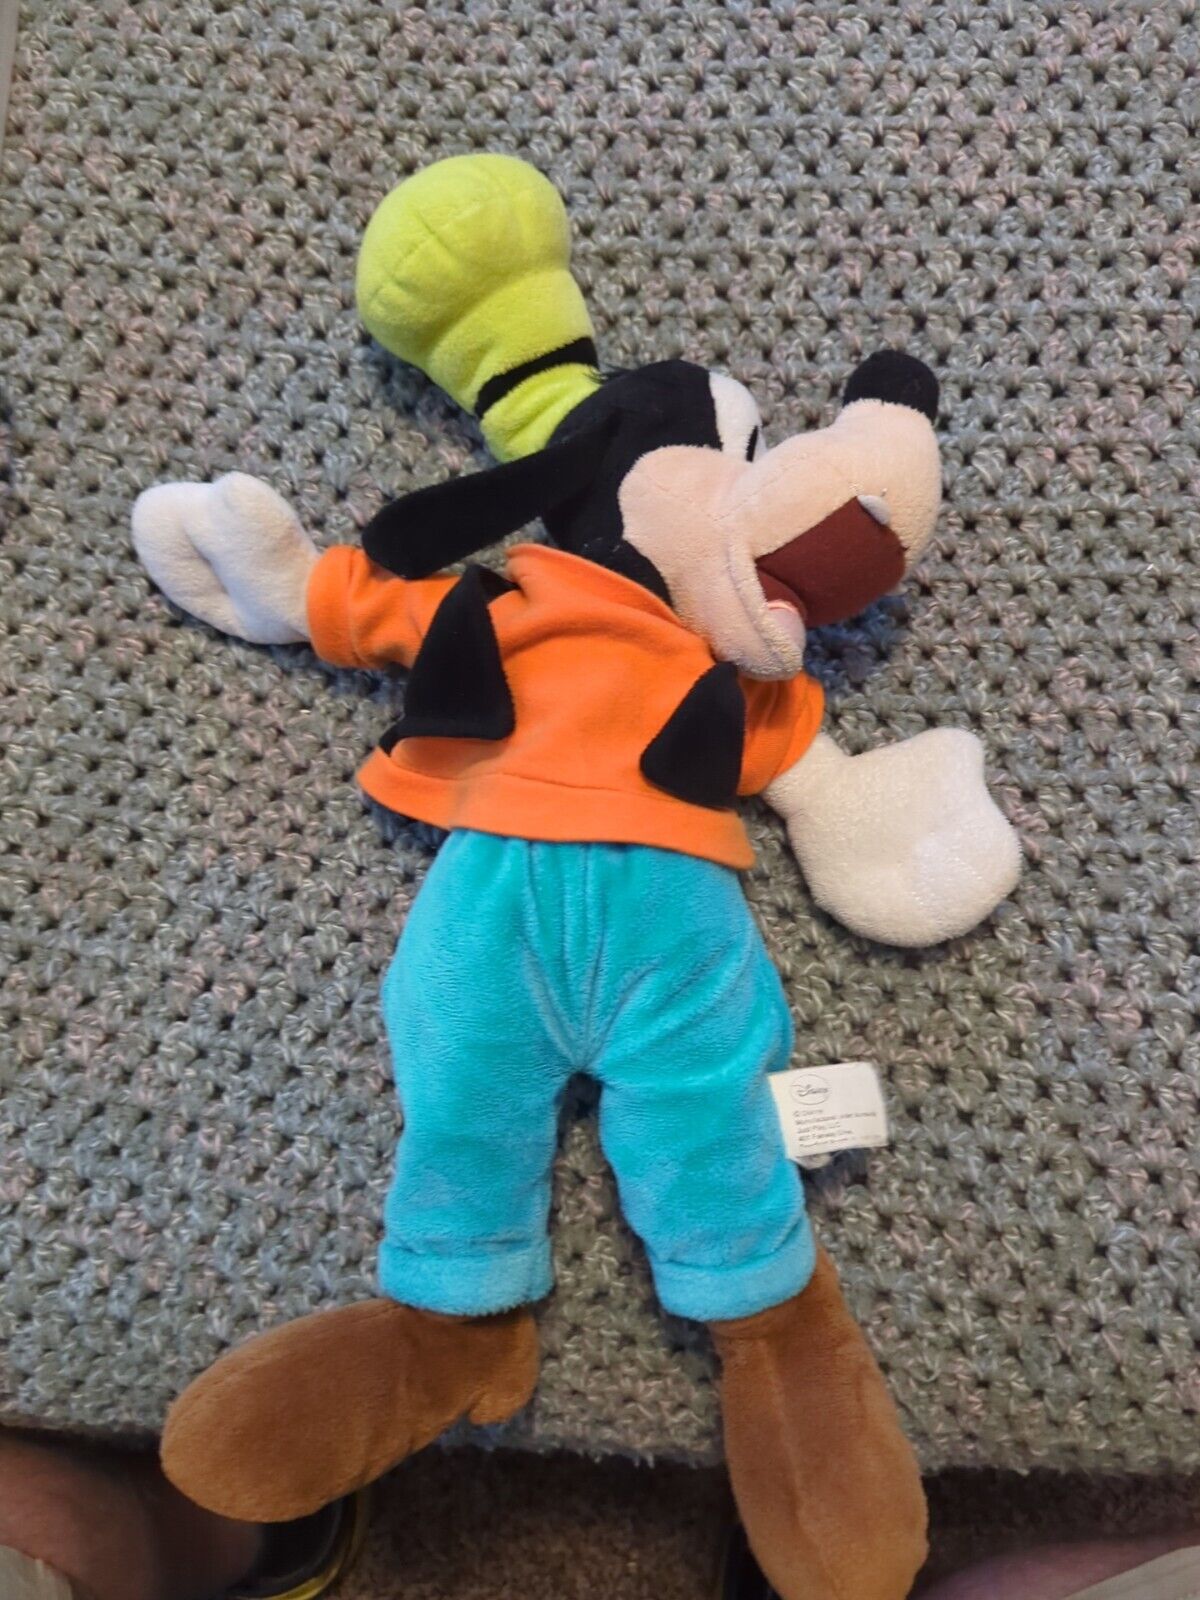 Goofy Authentic Disney Store Original Genuine 20” Plush Doll Toy Stuffed Animal